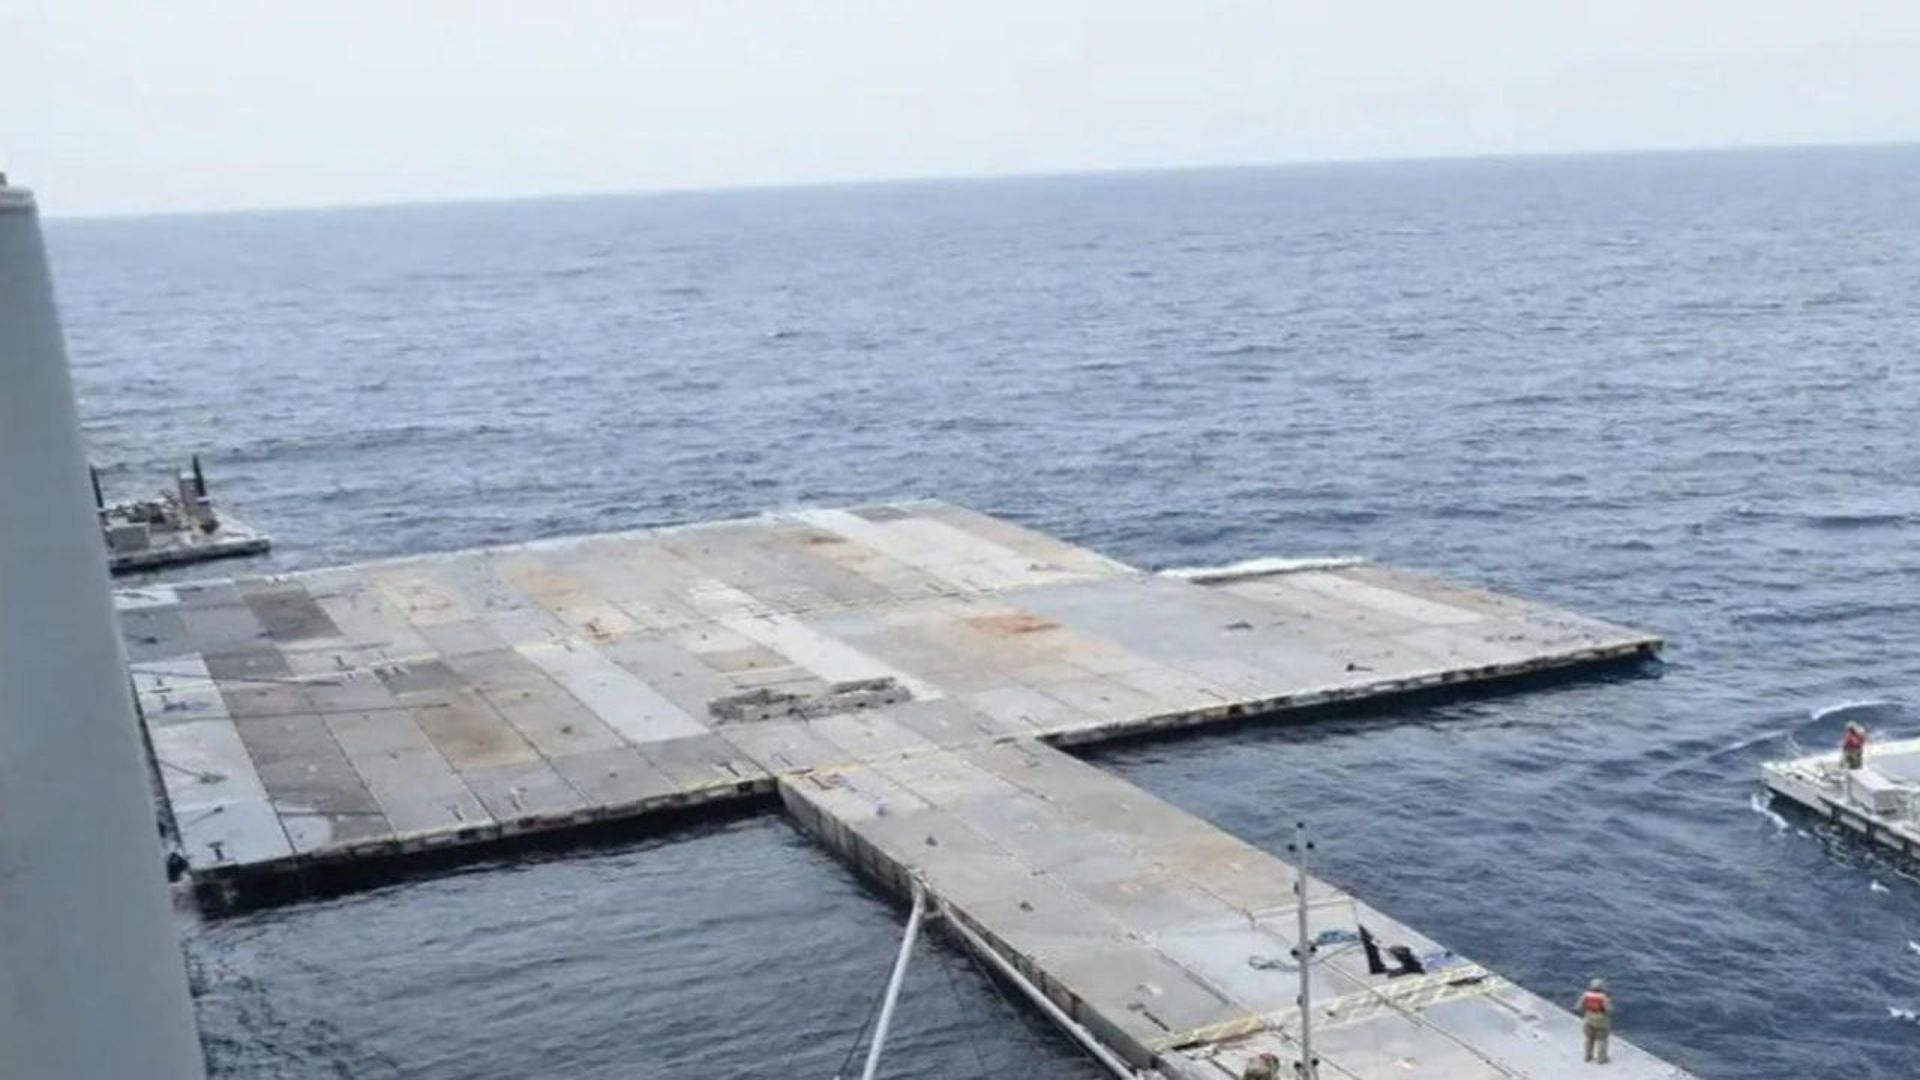 US Gaza Aid Stopped: Pier Disaster at Sea